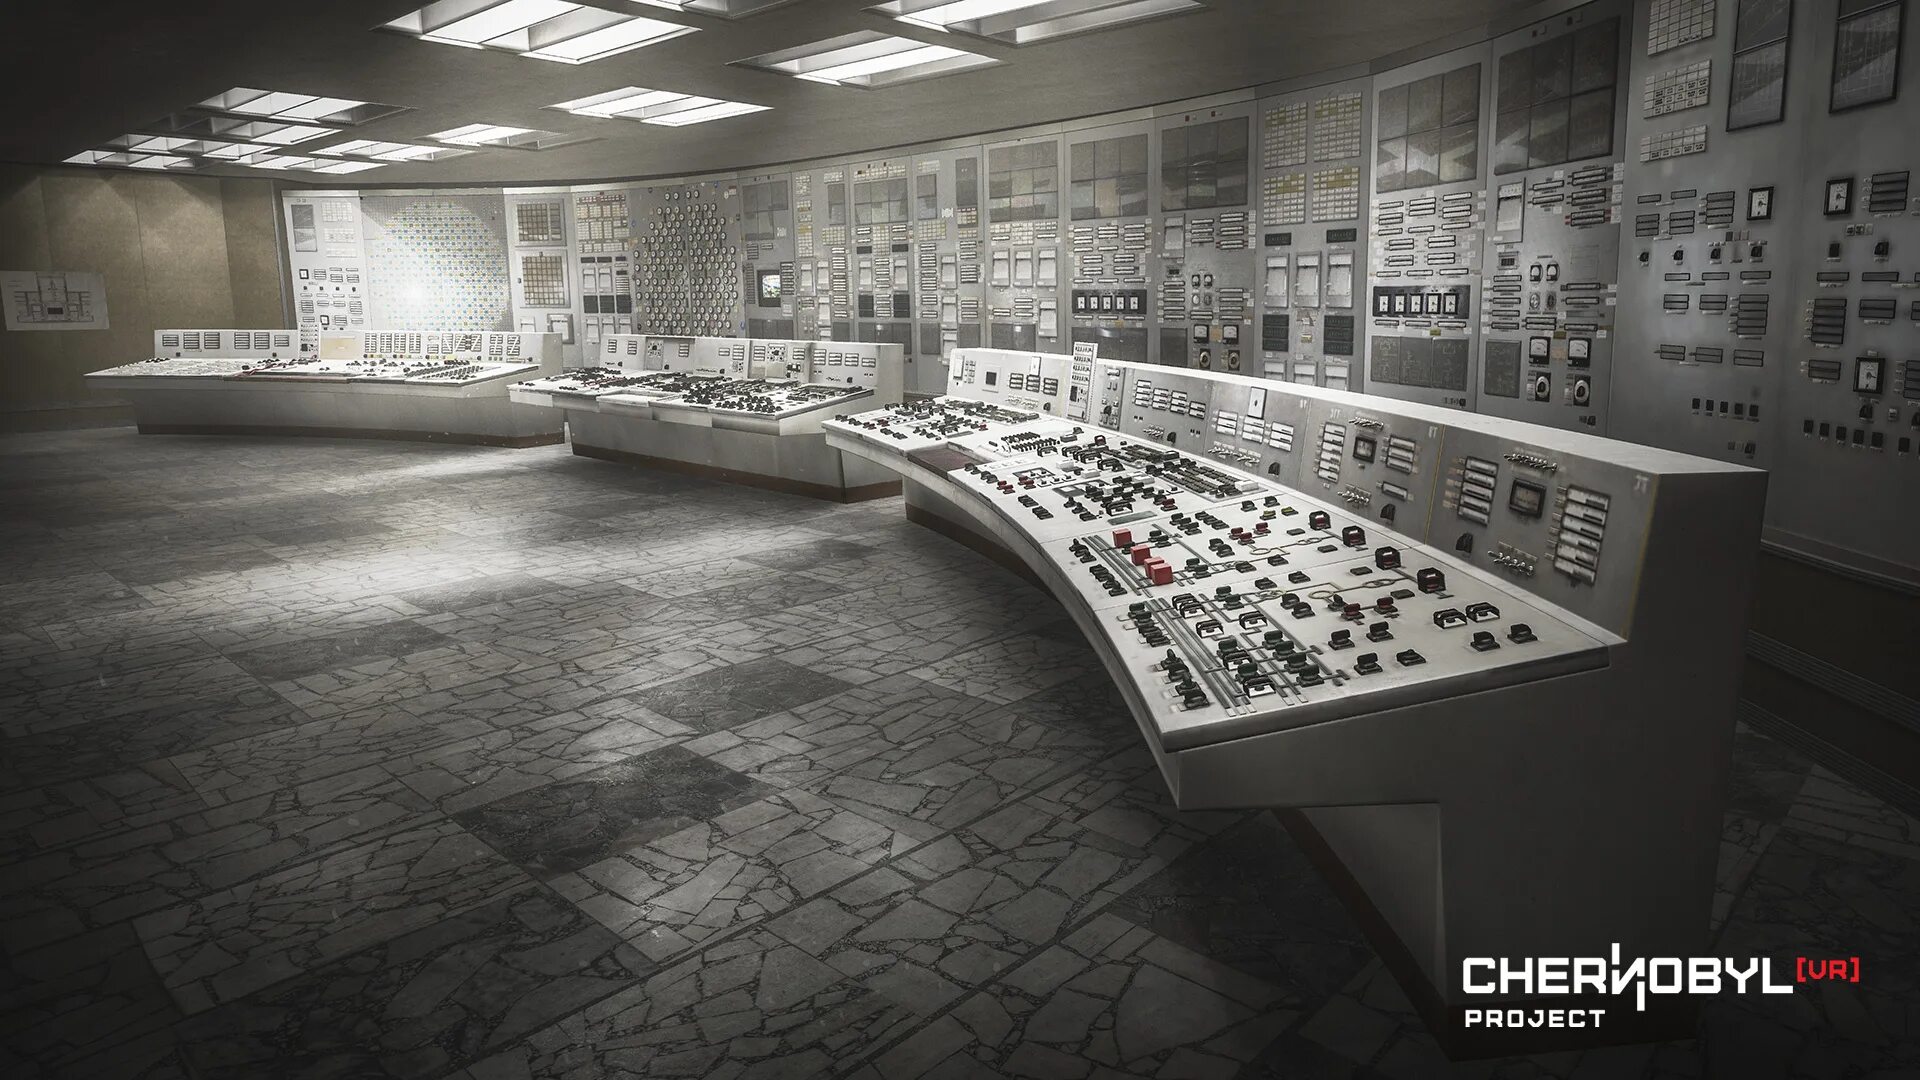 Chernobyl дата выхода. БЩУ 1 ЧАЭС. Чернобыль VR Project. БЩУ 4 ЧАЭС. БЩУ 4 ЧАЭС до аварии.